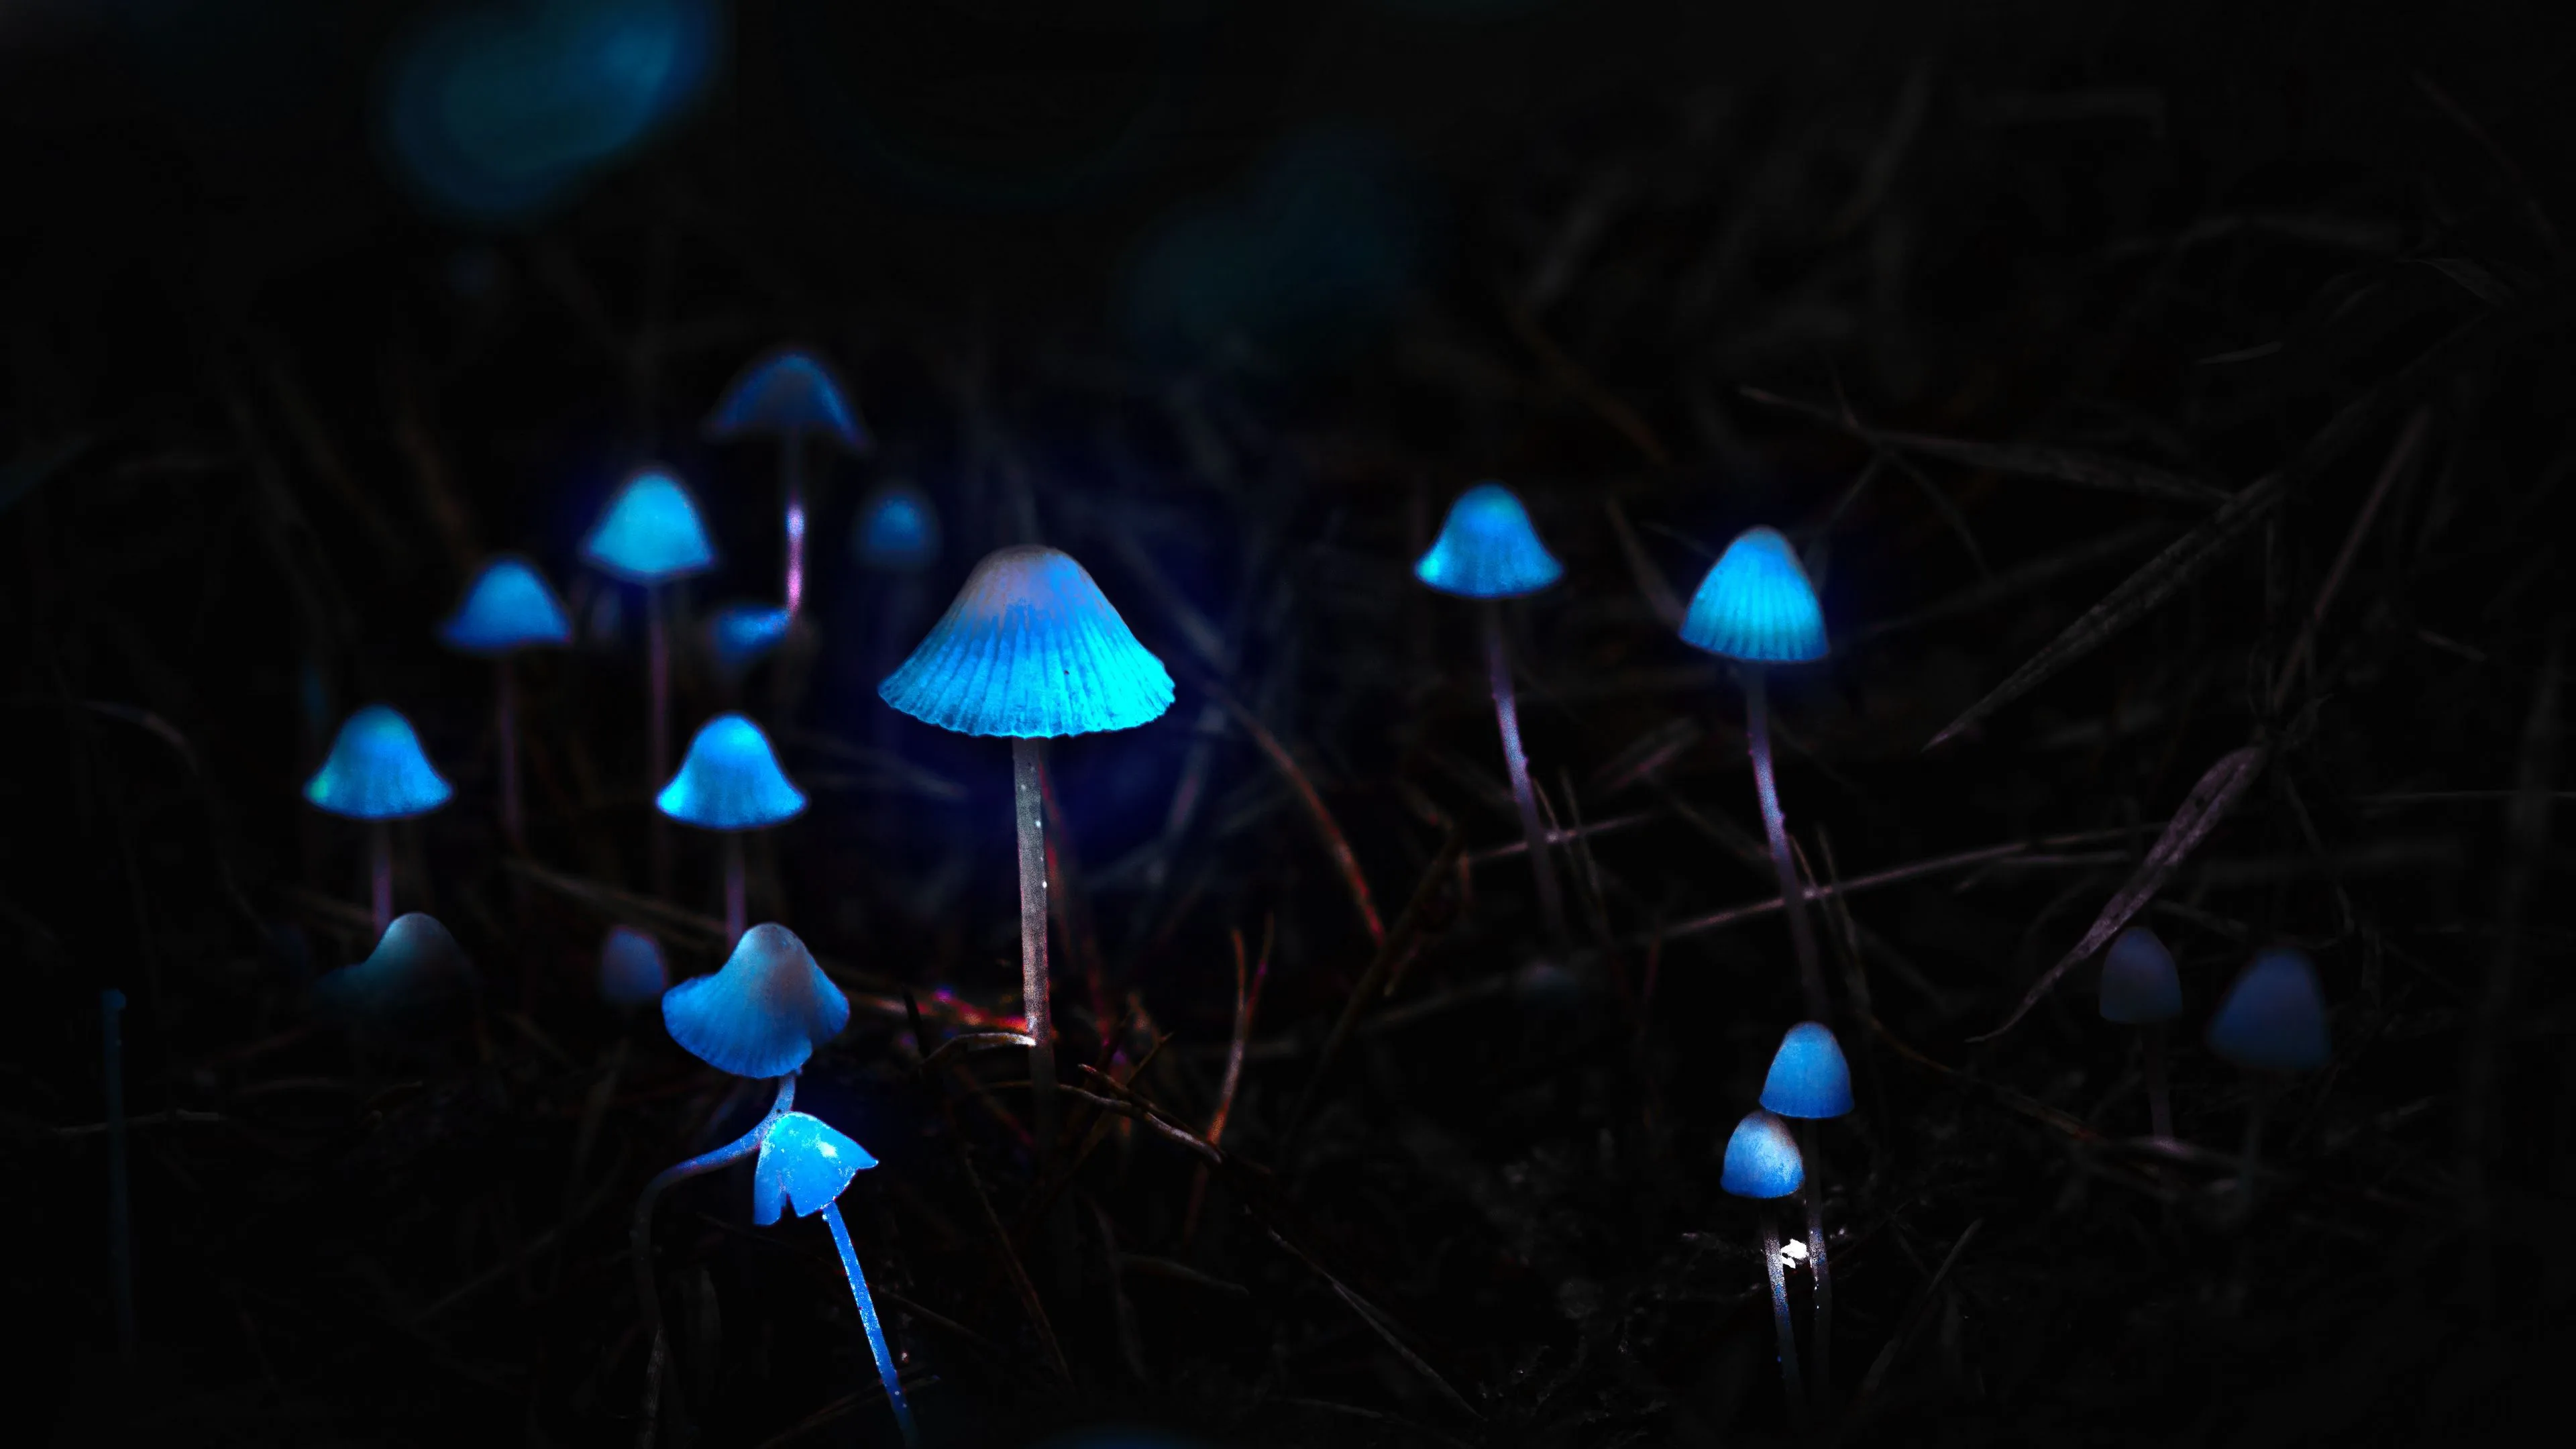 mushrooms toadstools glow photoshop 4k 1692006754